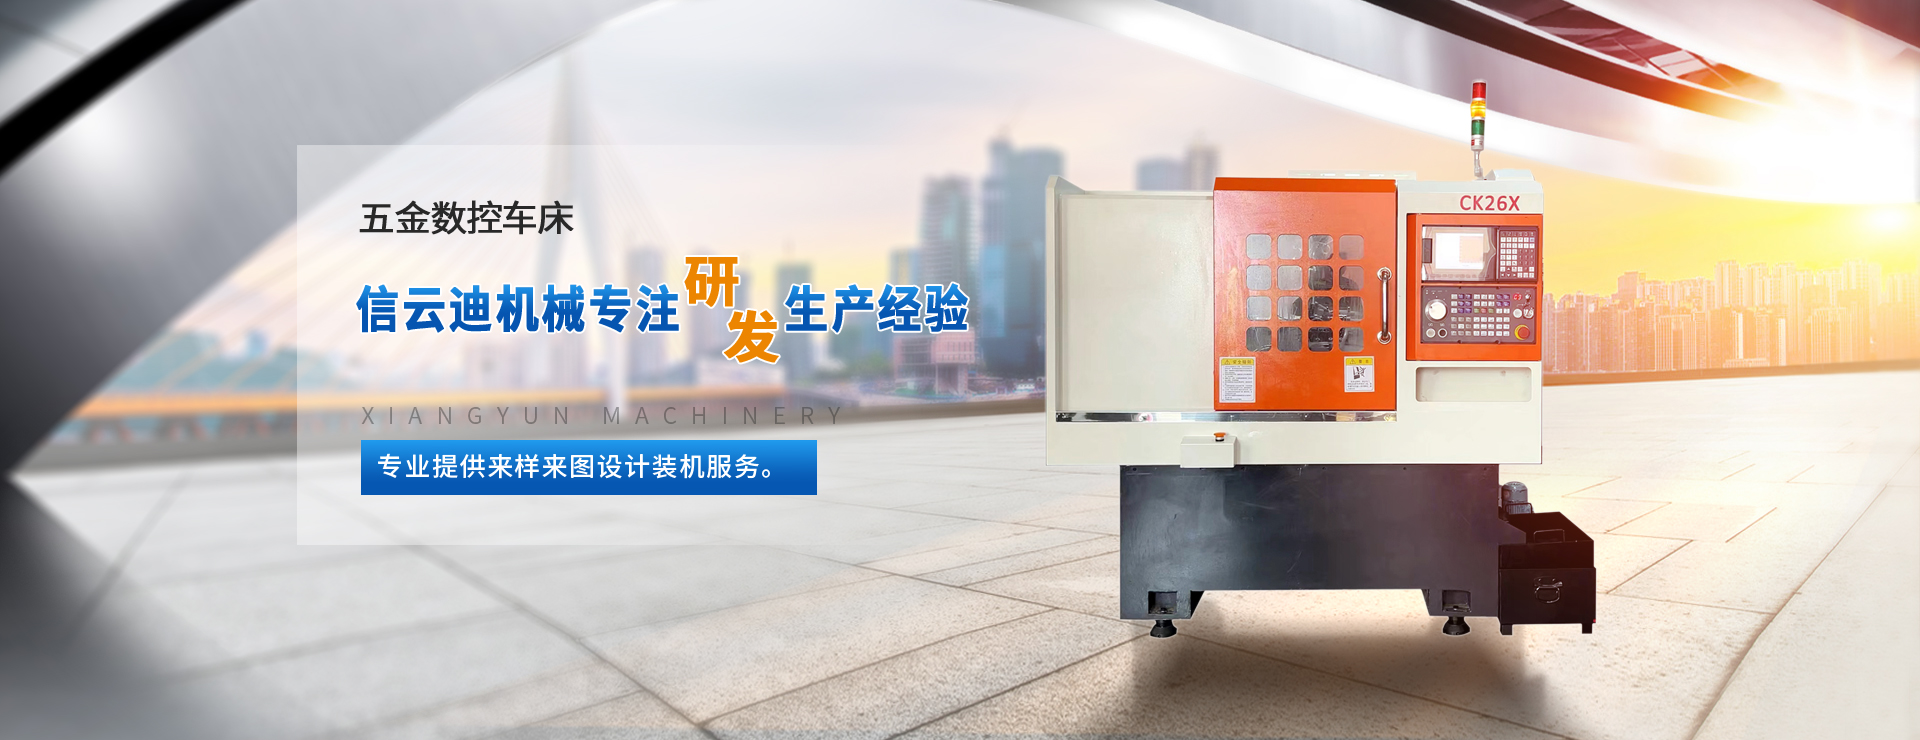  Guangdong CNC lathe, hydraulic automation equipment, window pulley lathe